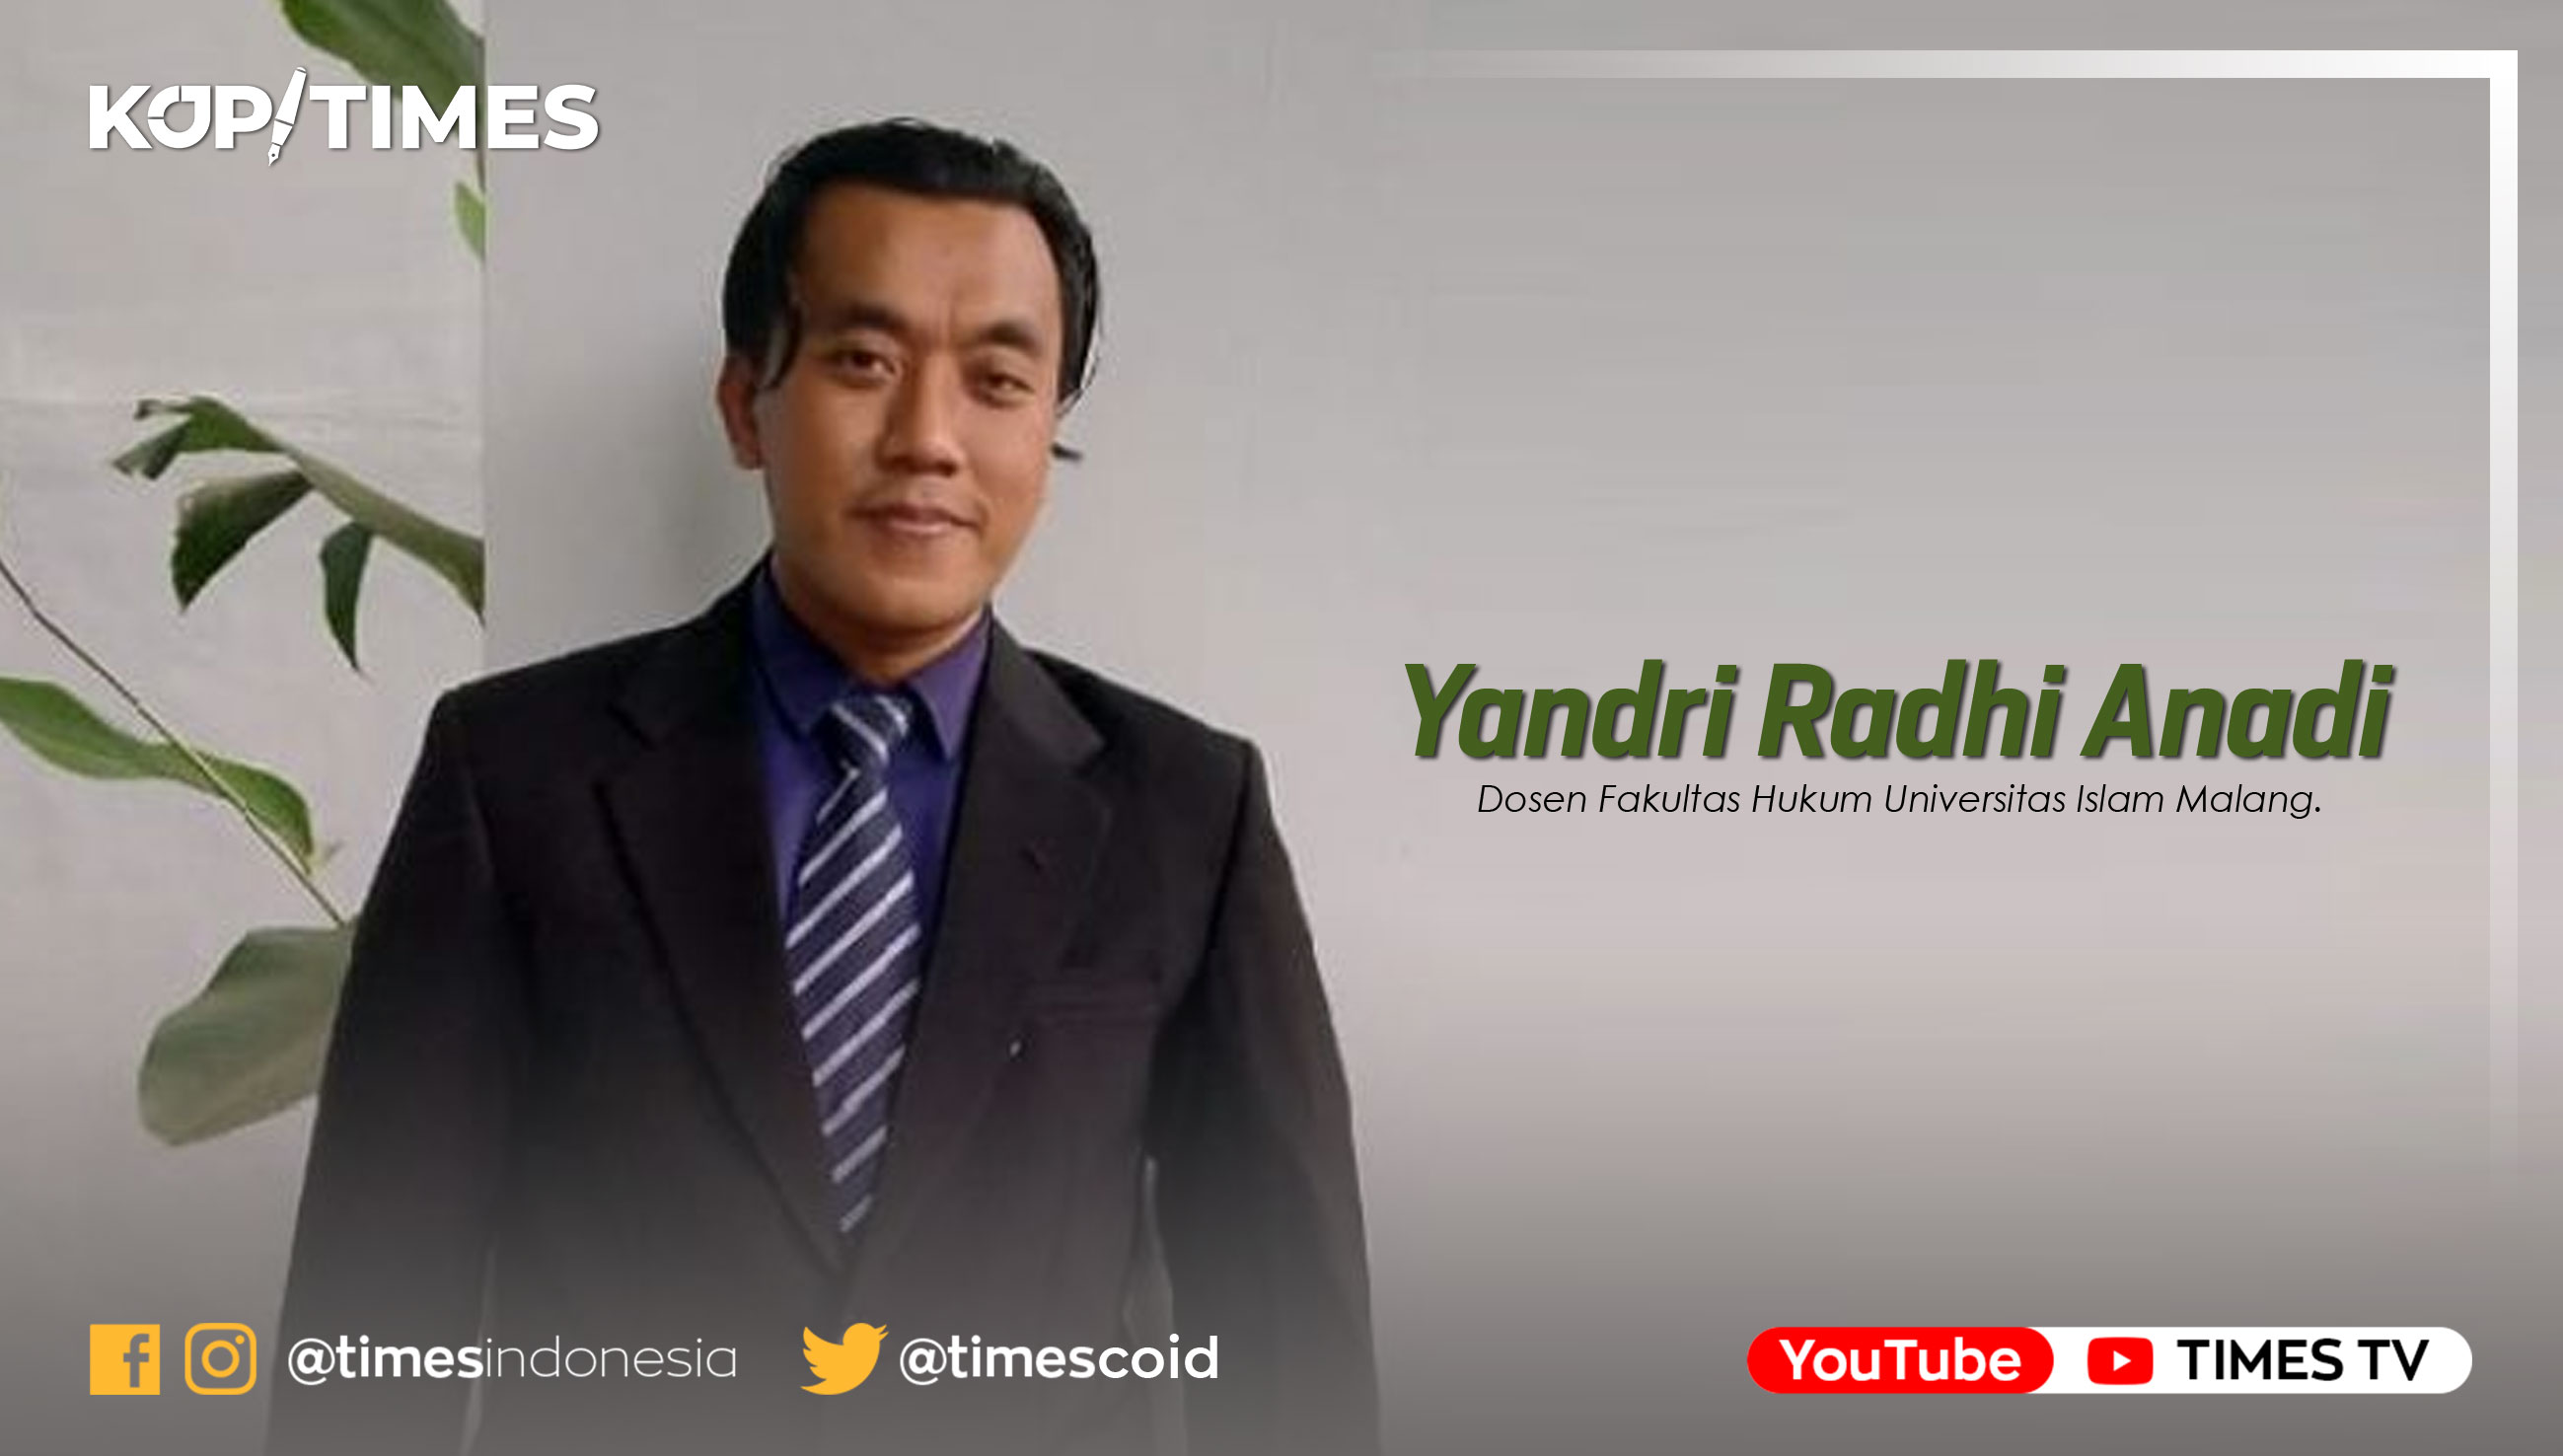 Yandri Radhi Anadi S.H., M.Kn., Dosen Fakultas Hukum (FH) Universitas Islam Malang (UNISMA).